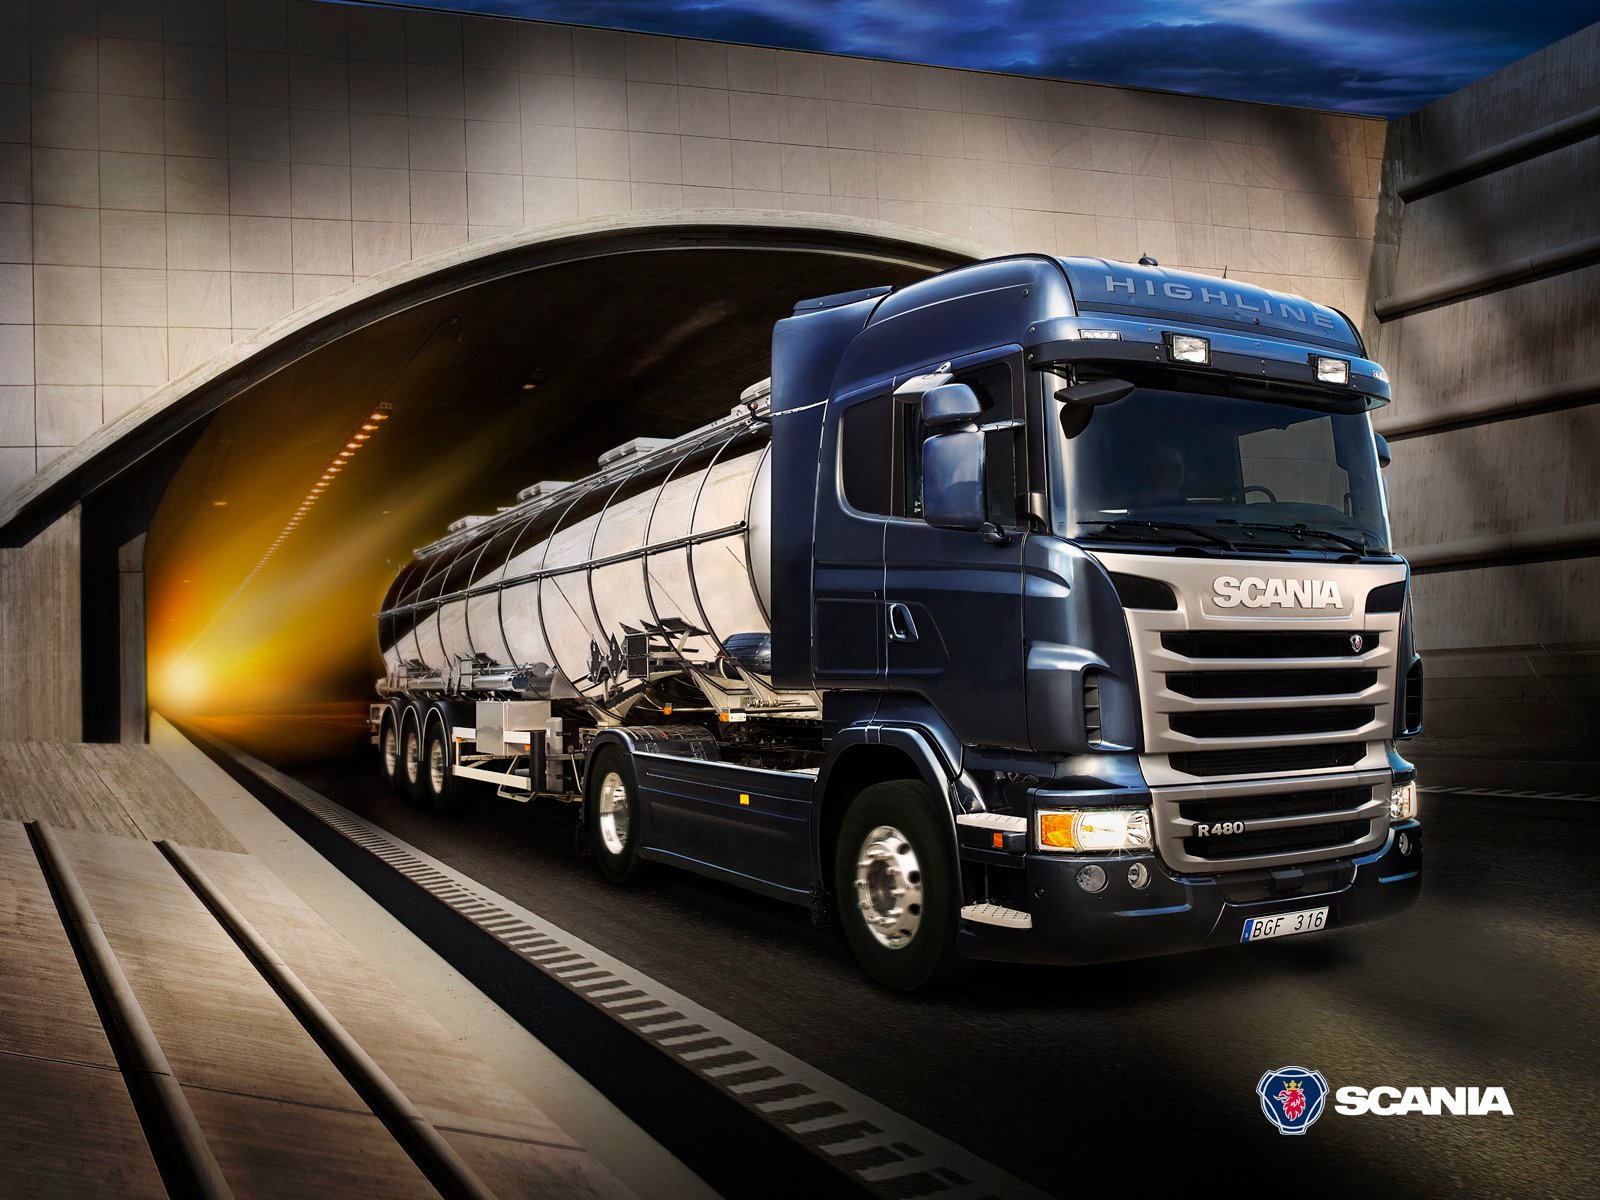 Trucks Scania Wallpaper Free Download